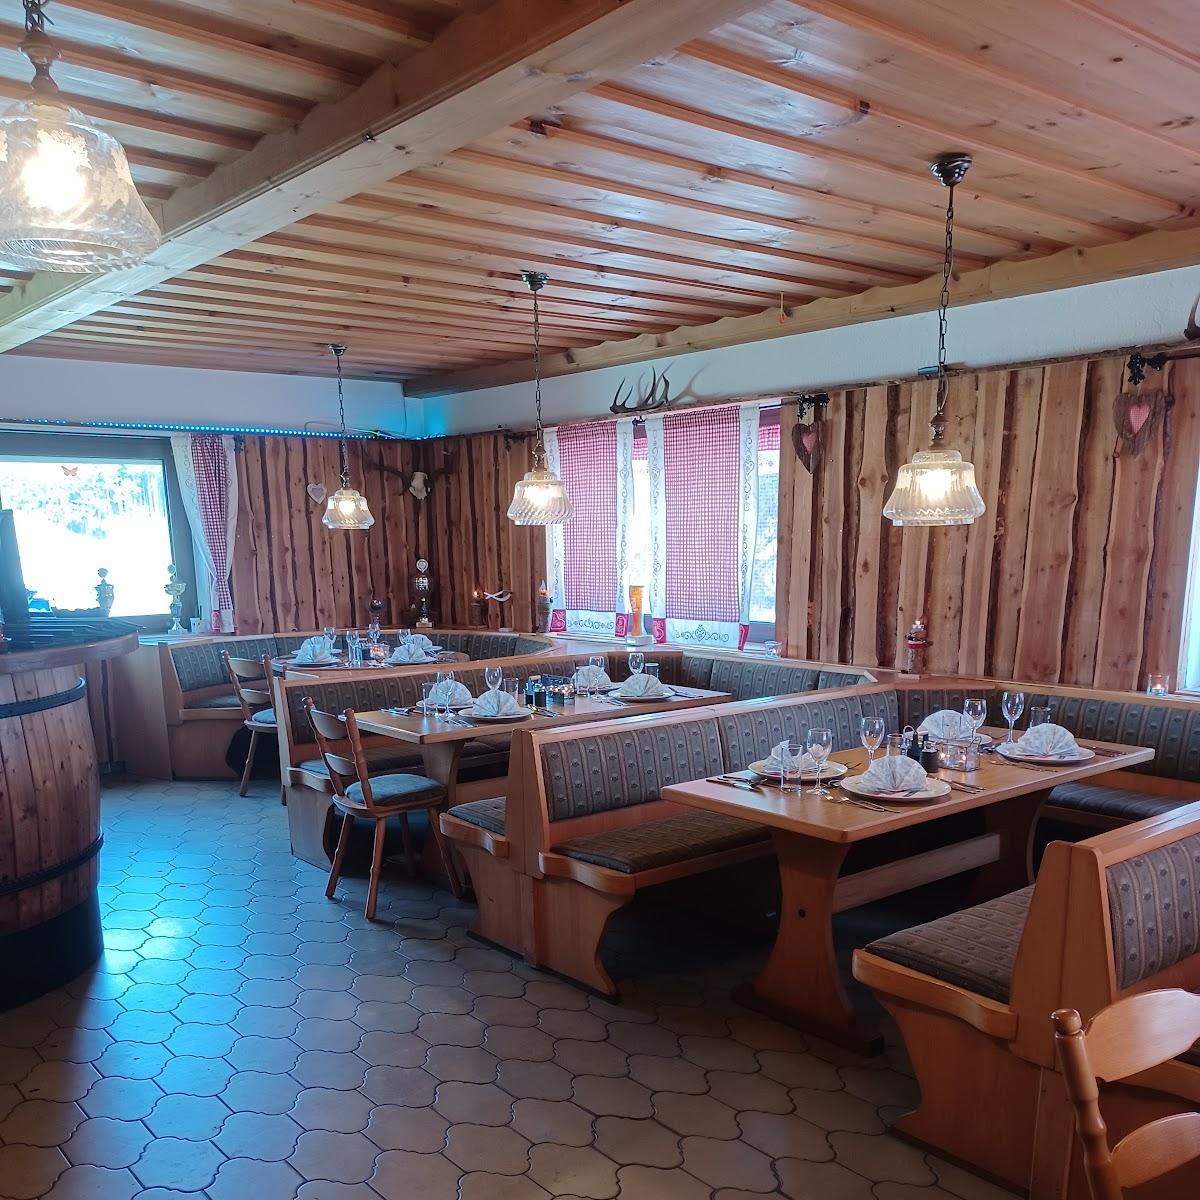 Restaurant "Ristorante pizzeria Da Jasmine" in Kirchberg im Wald